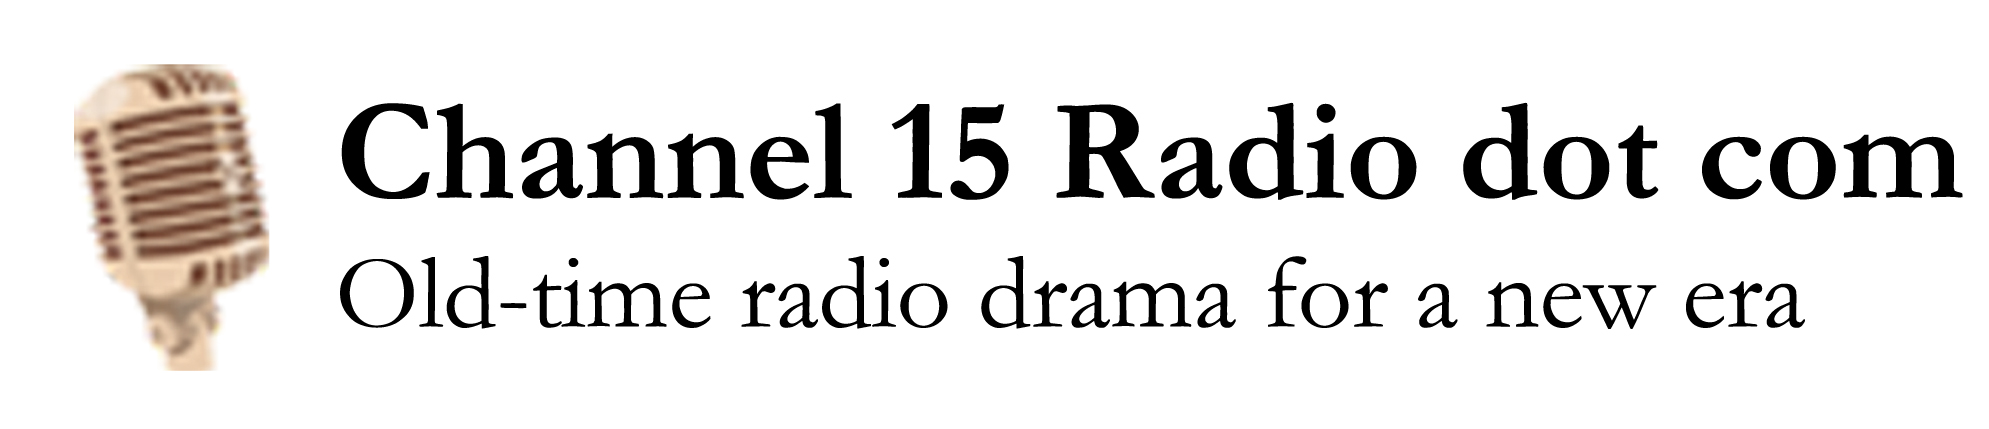 Channel 15 Radio dot com